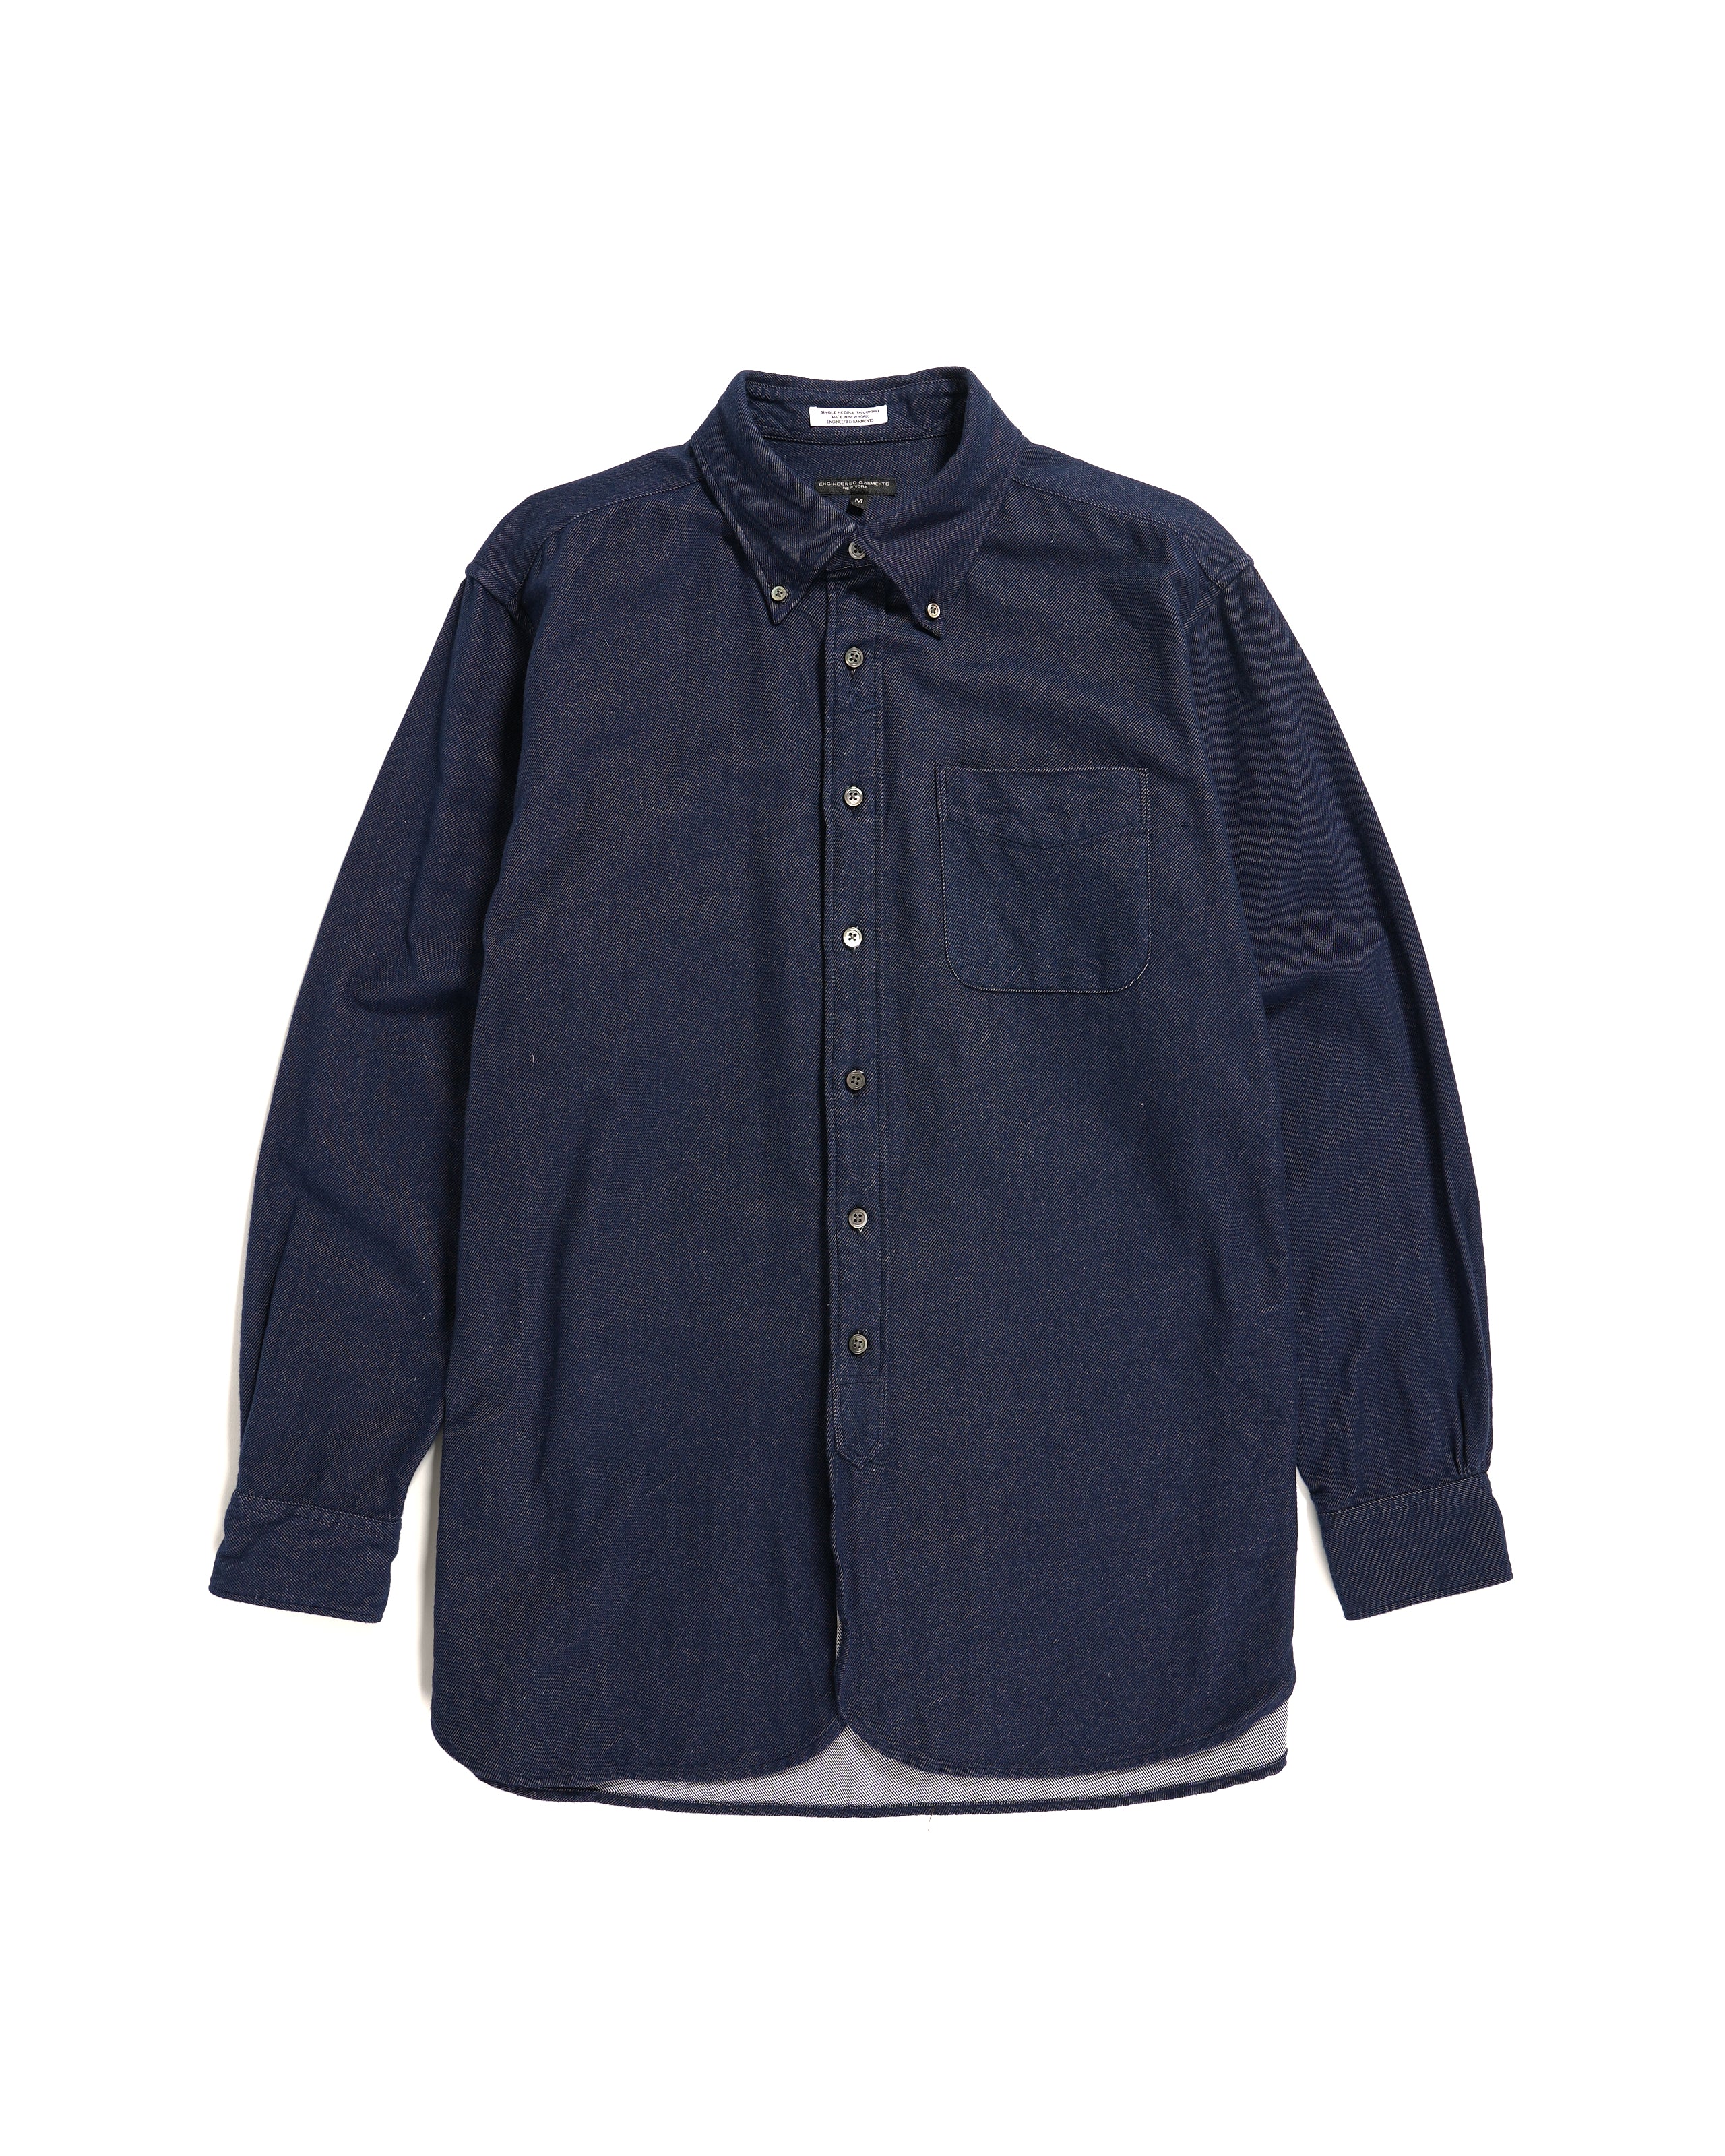 19 Century BD Shirt - Navy Cotton Oxford Twill